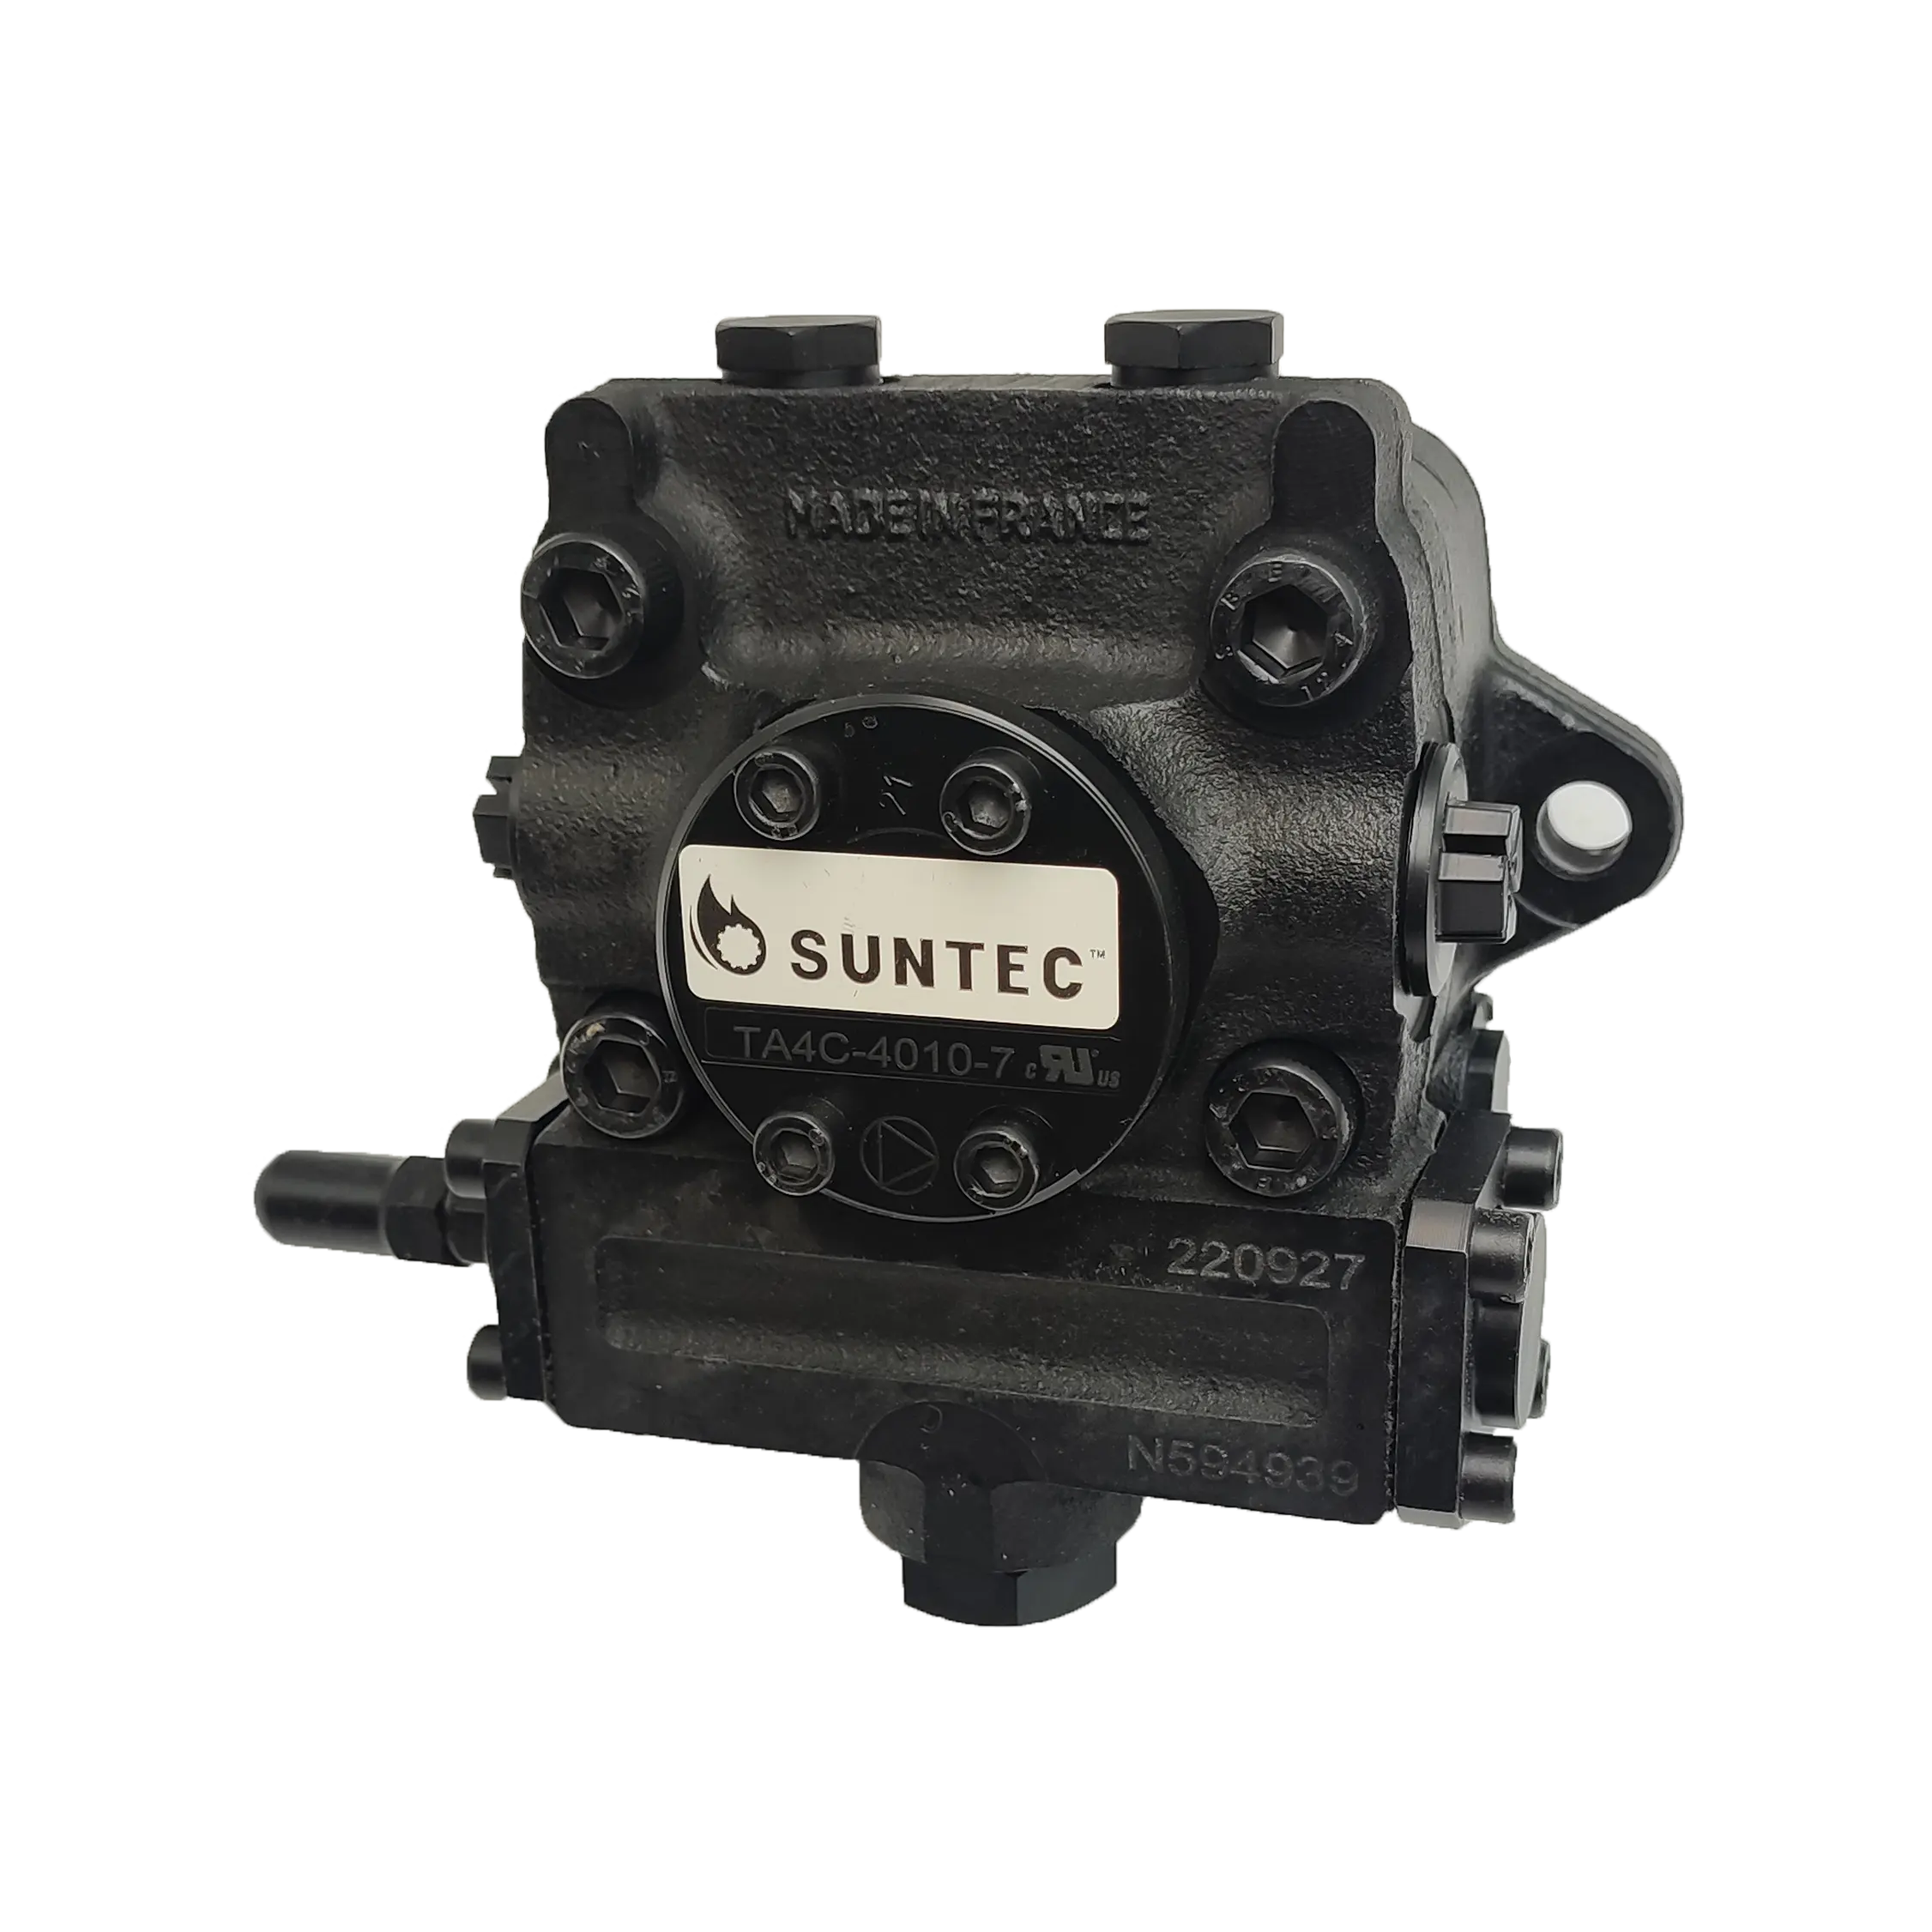 Wholesale Price France Suntec Oil Pumps TA4C 4010 7 Fuel Transfer Pump For Industrial Combustion